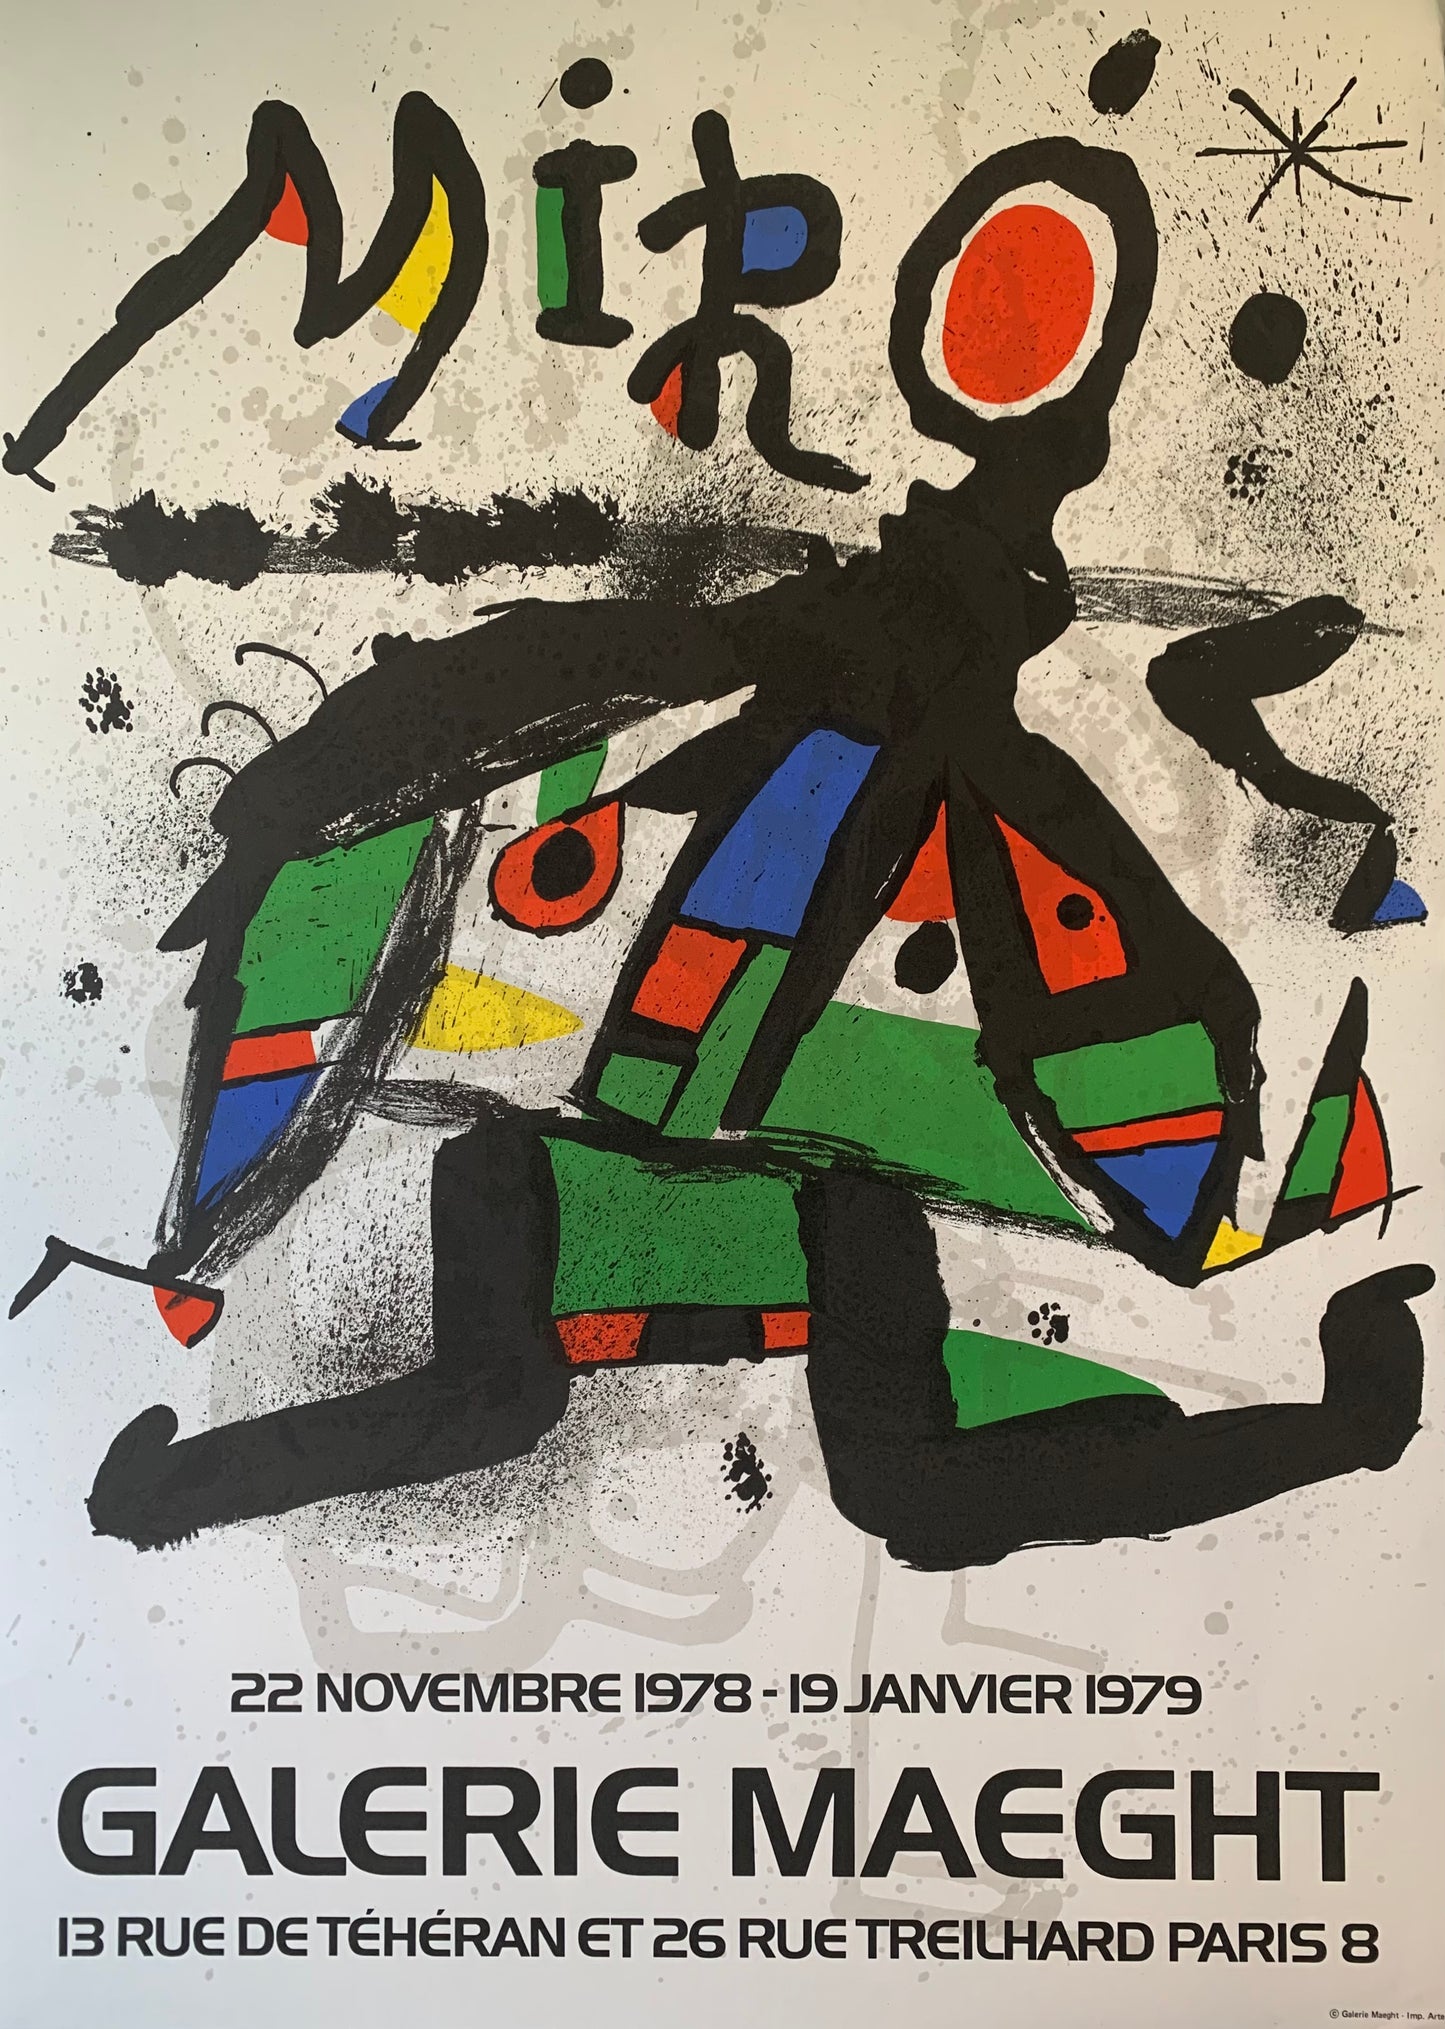 Joan Miro. "Gallery Maeght", 1978